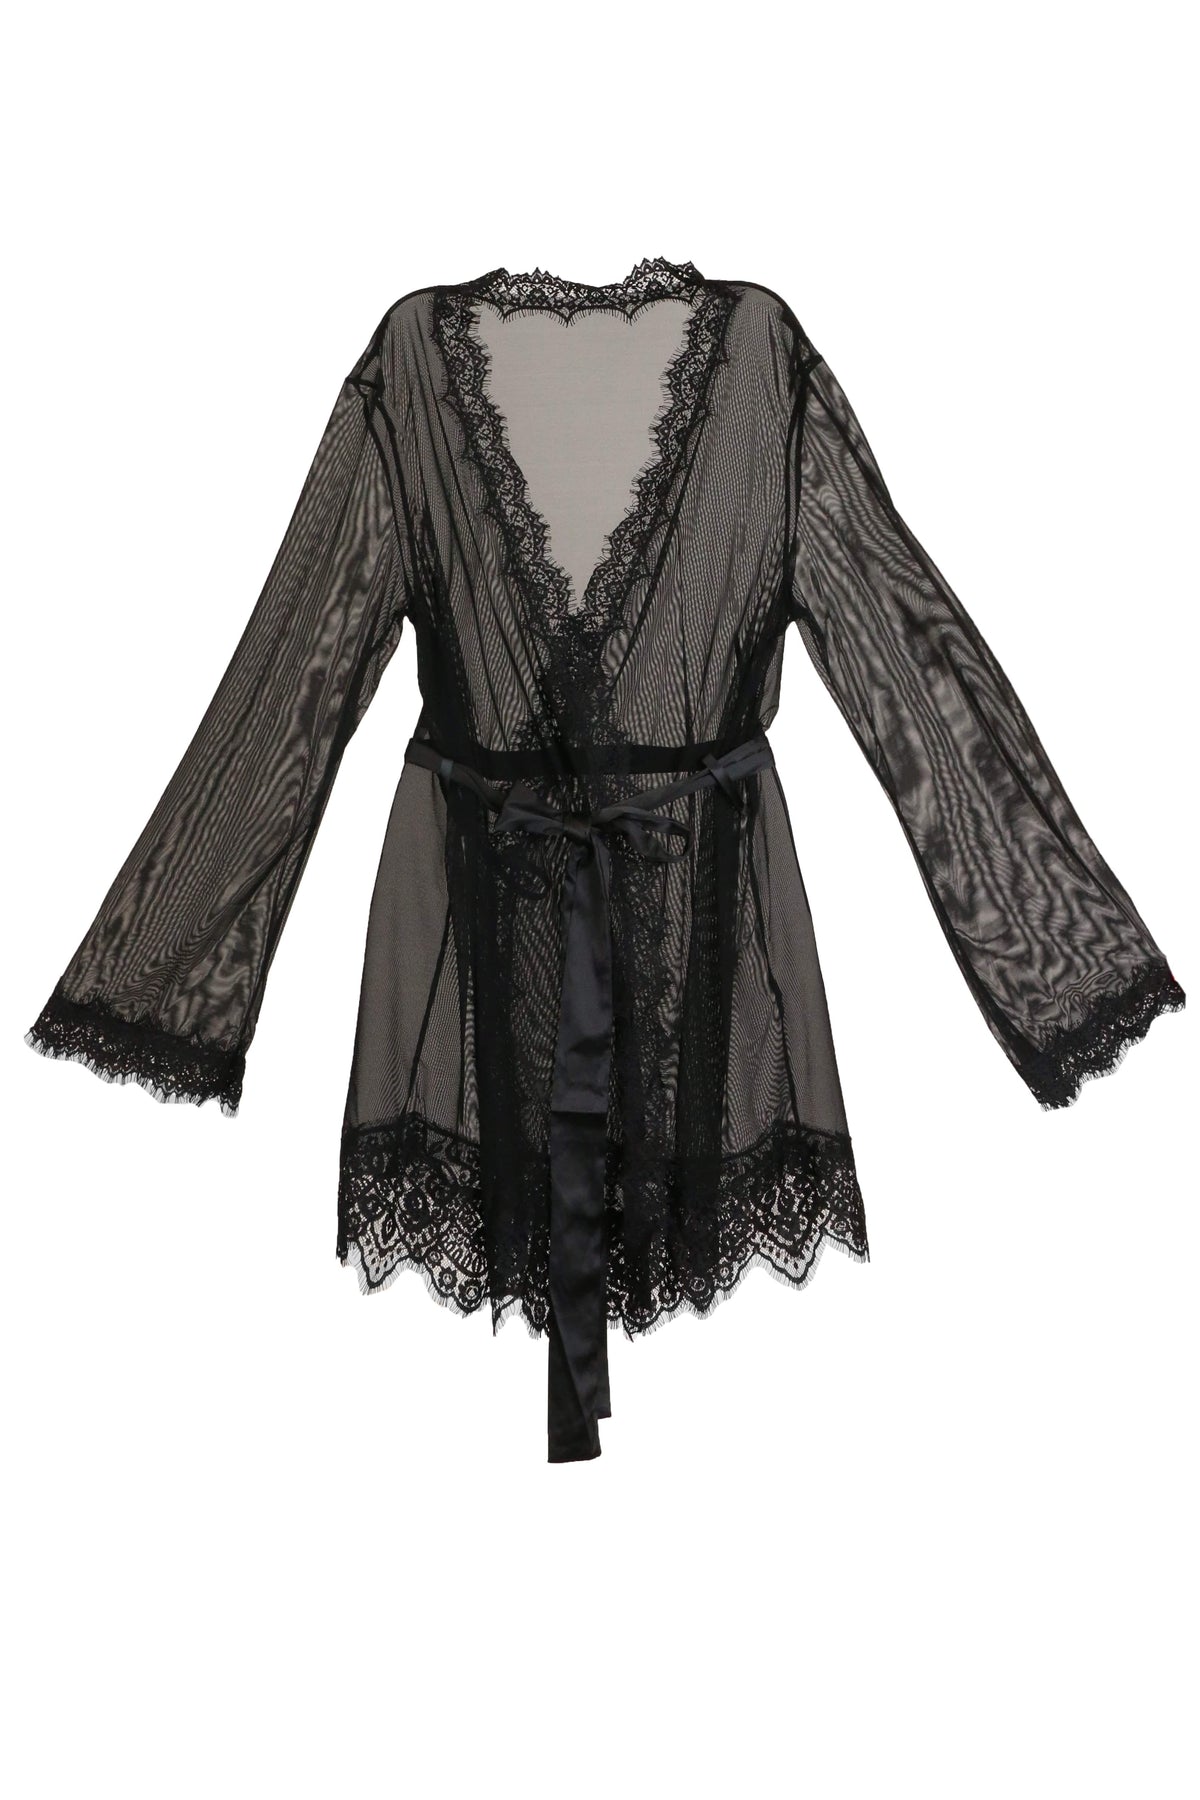 Oh La La Cheri Robe Black / S/M Provence Sheer Shortie Robe Set - Black